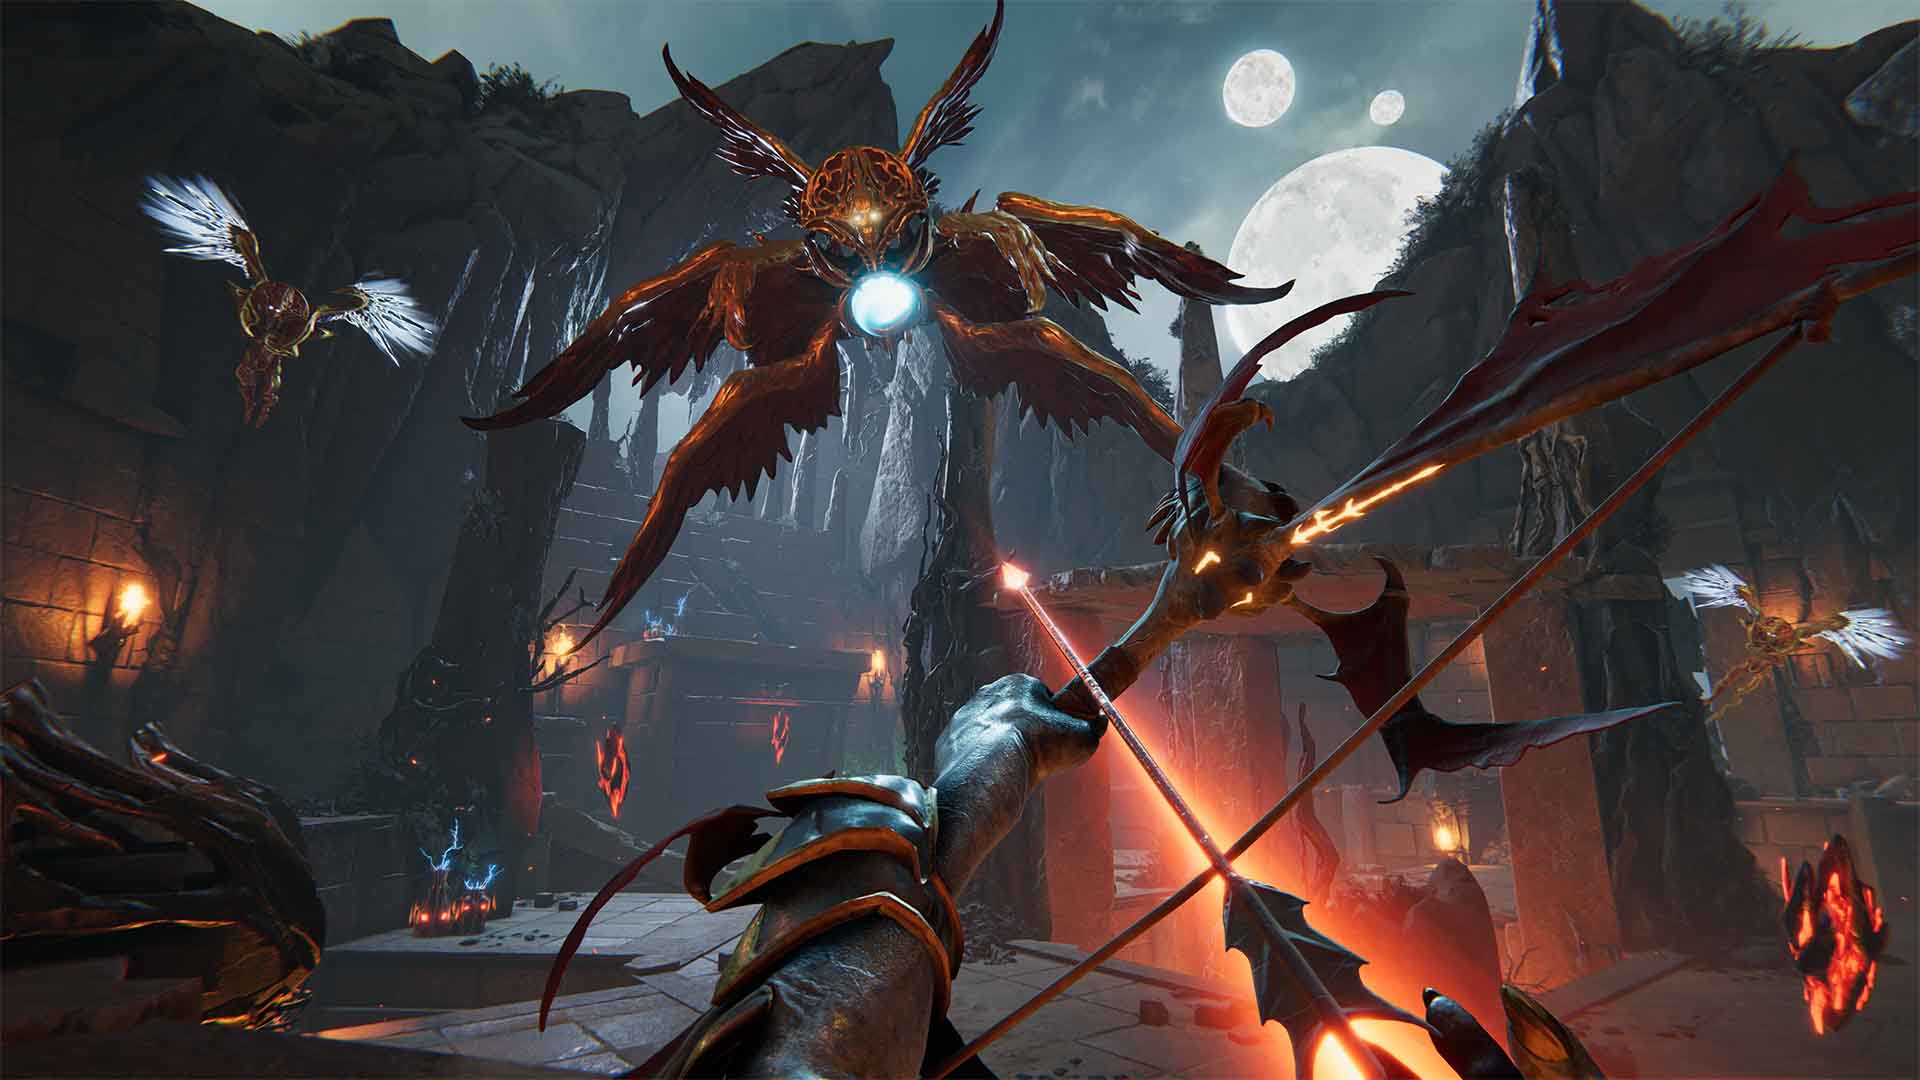 Funcom Press Center - Metal: Hellsinger Announces First DLC: Dream of the  Beast!